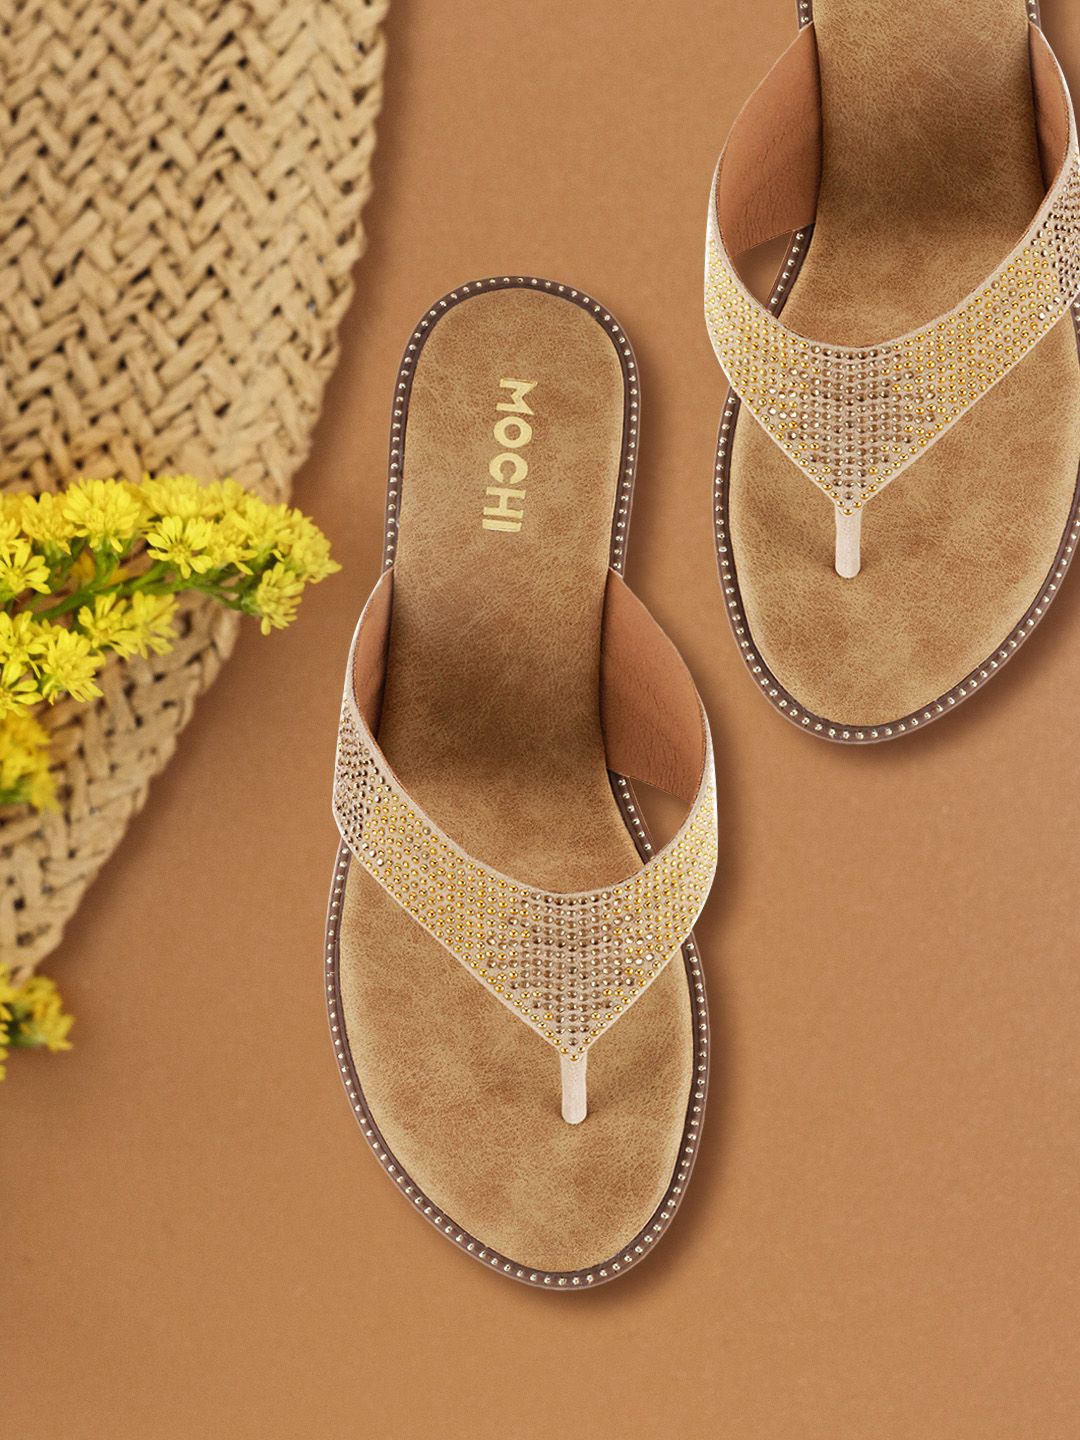 Mochi Women Beige Embellished Sandals Price in India